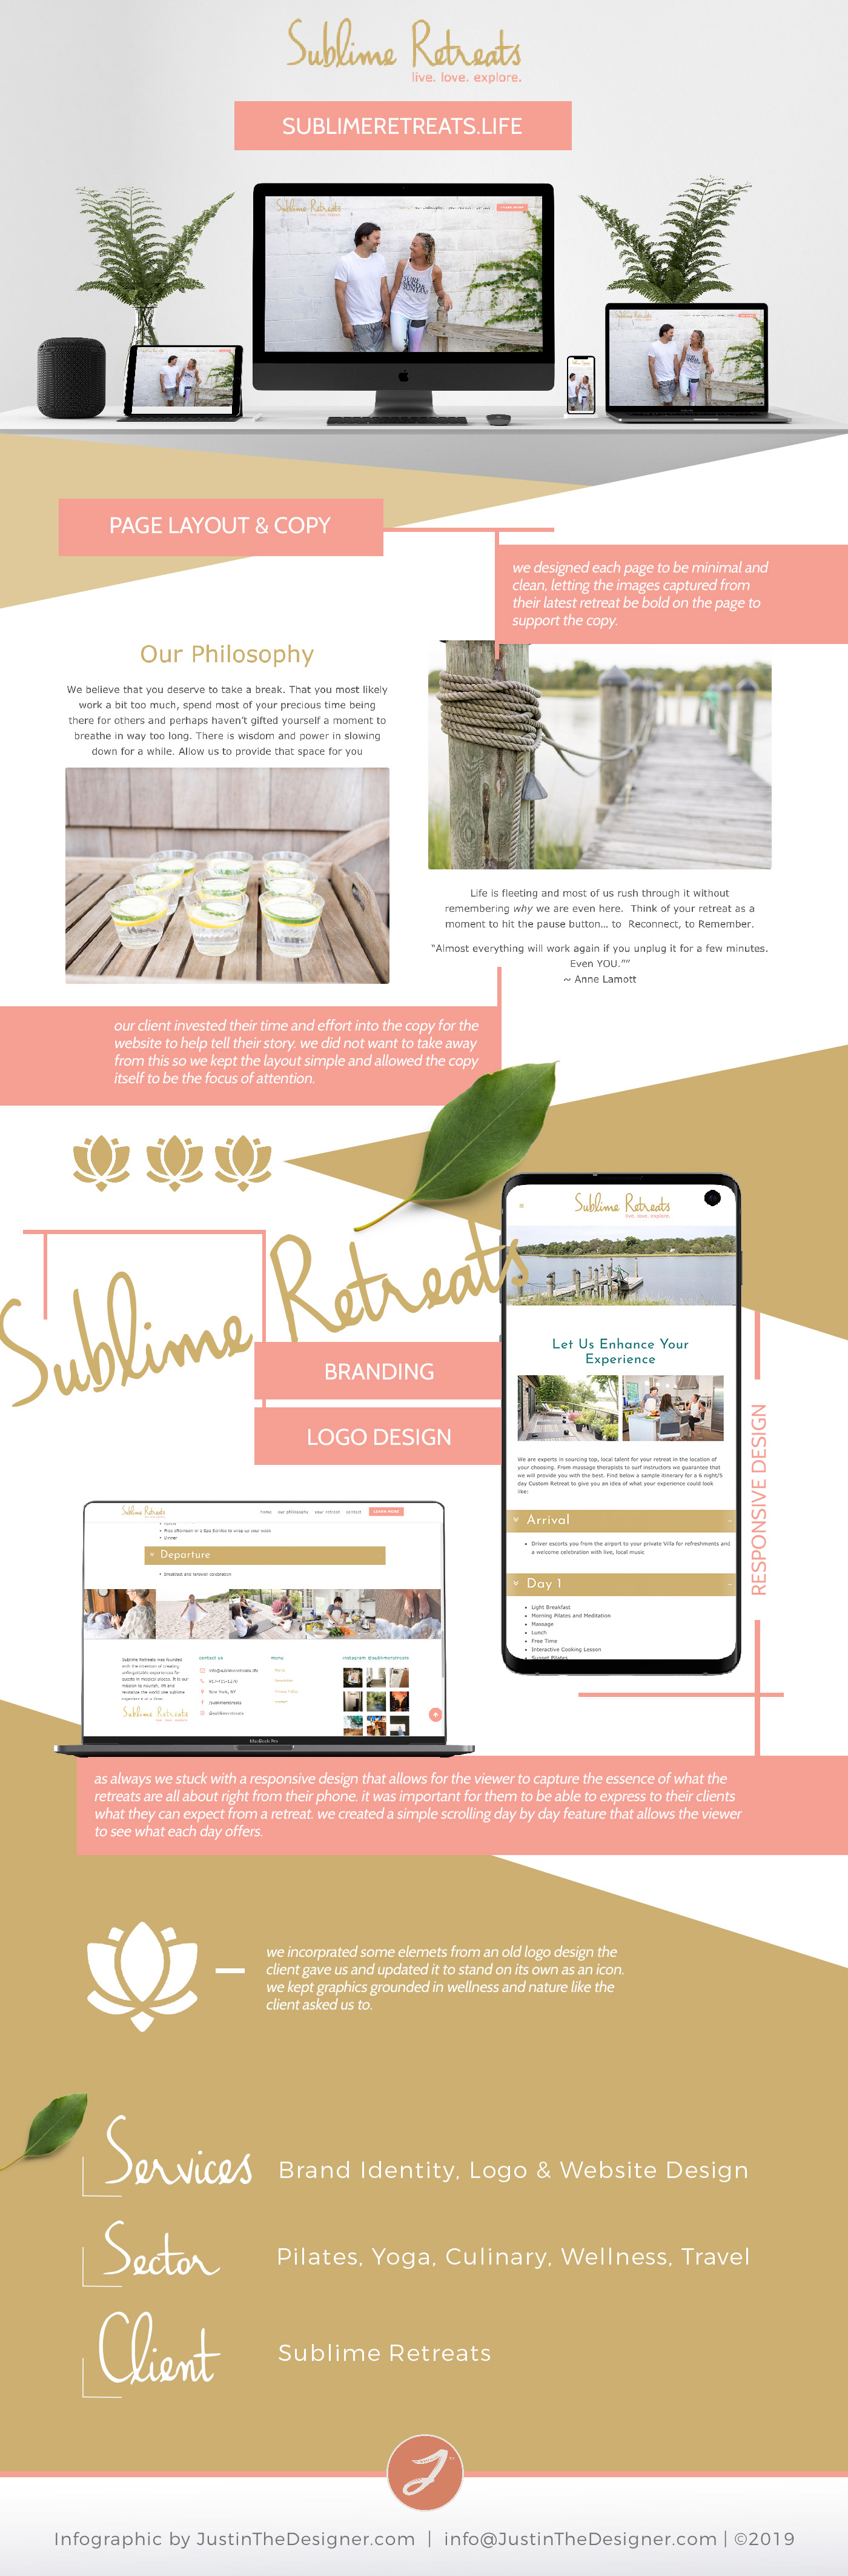 sublime retreats freelance designer pilates retreat wellness website culinary website Website Design Logo Design Branding design justin the designer Kevyn Zeller